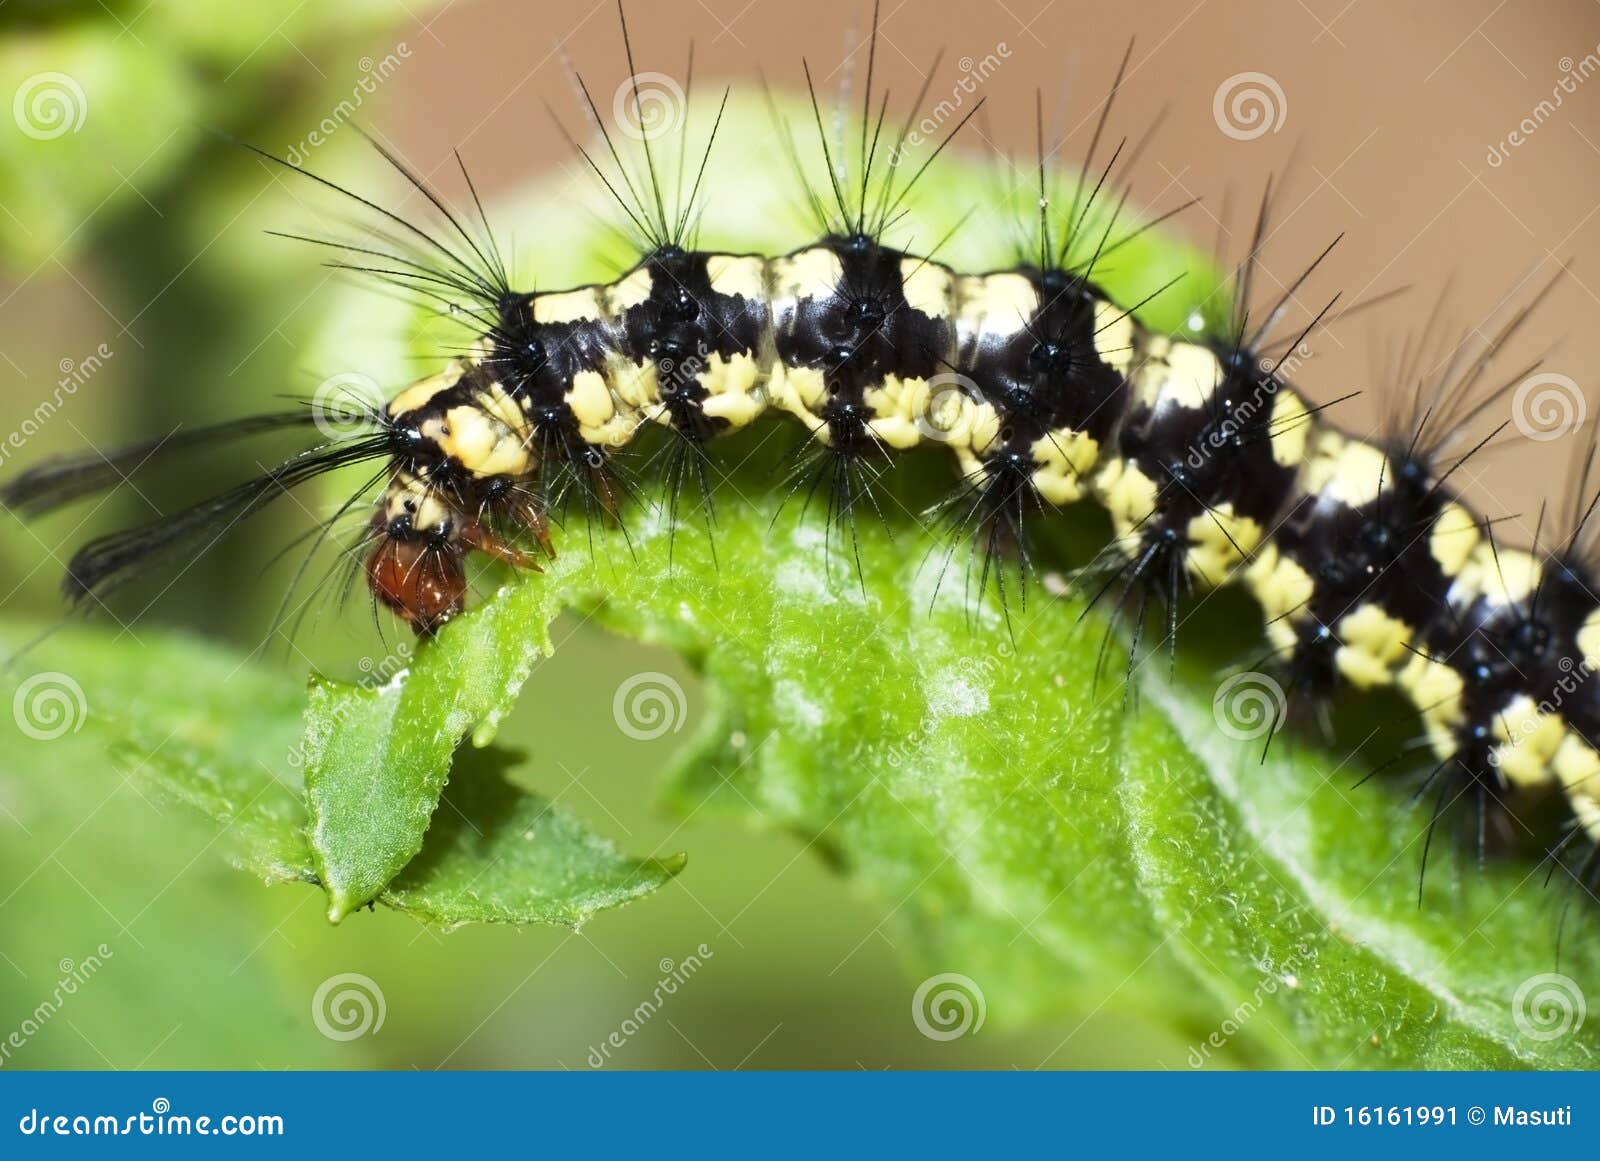 Black Hairy Caterpillar Stock Image Image Of Spikes 16161991